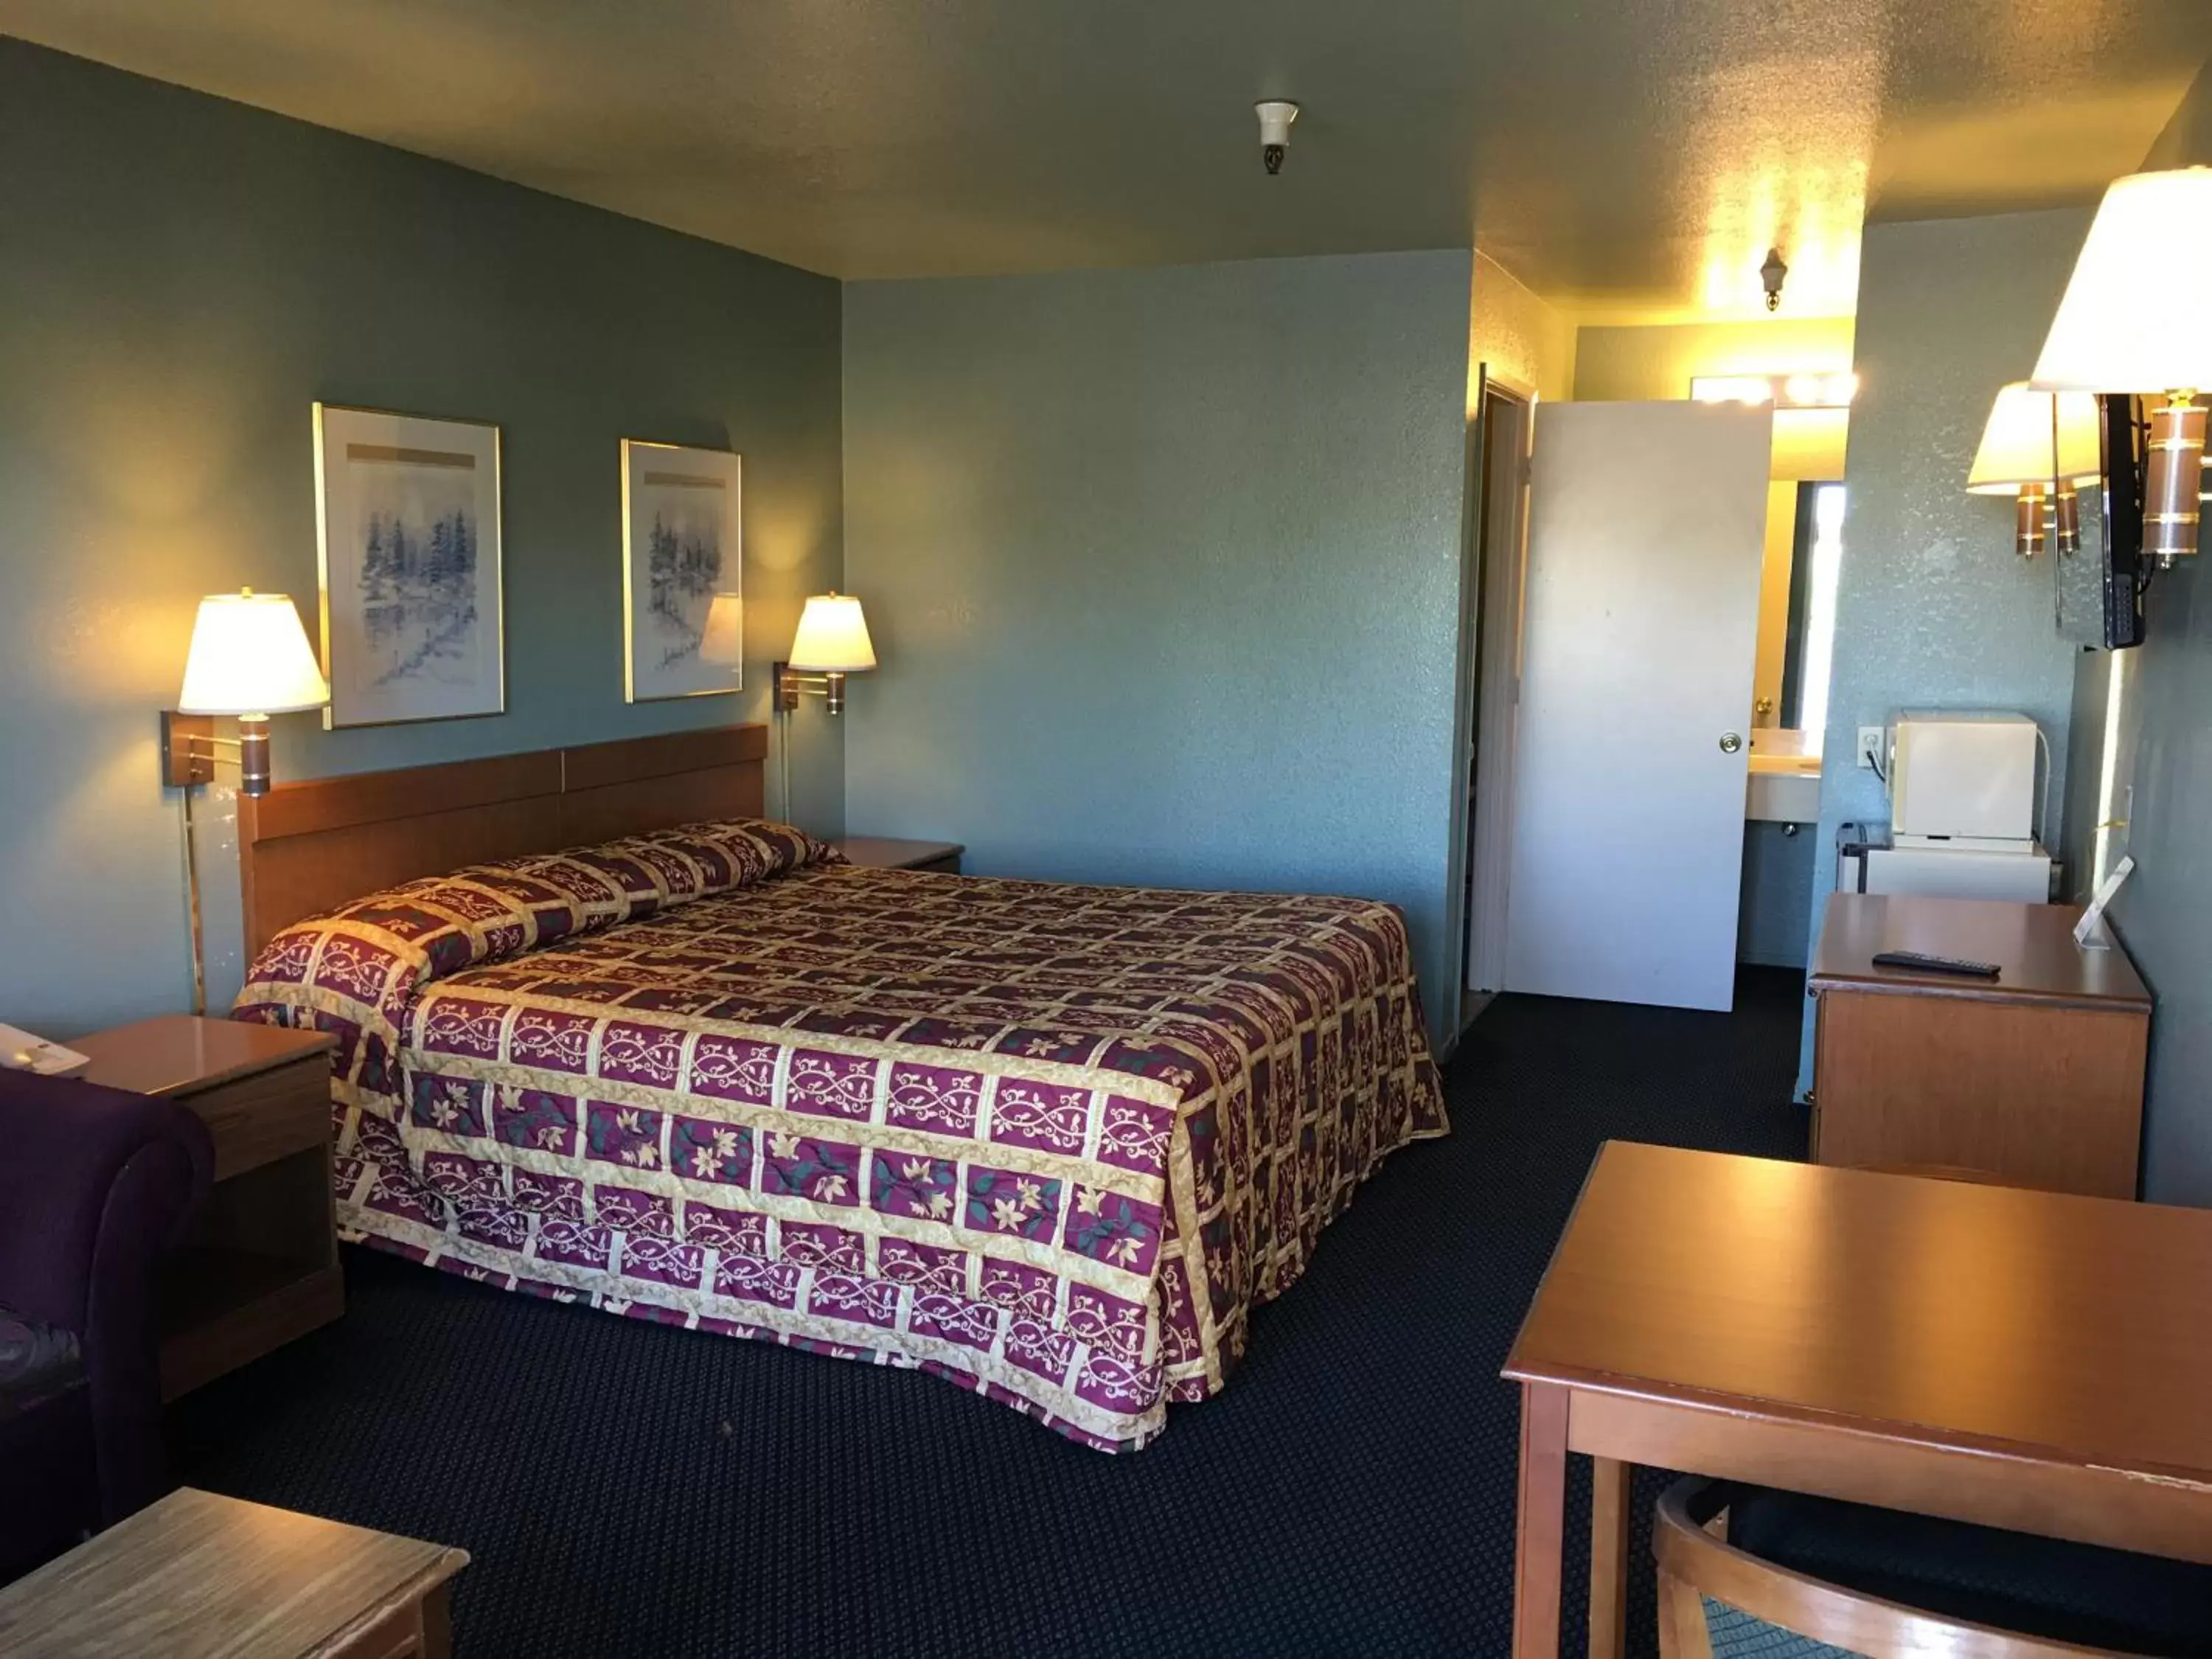 Bed, Room Photo in Applegate Inn